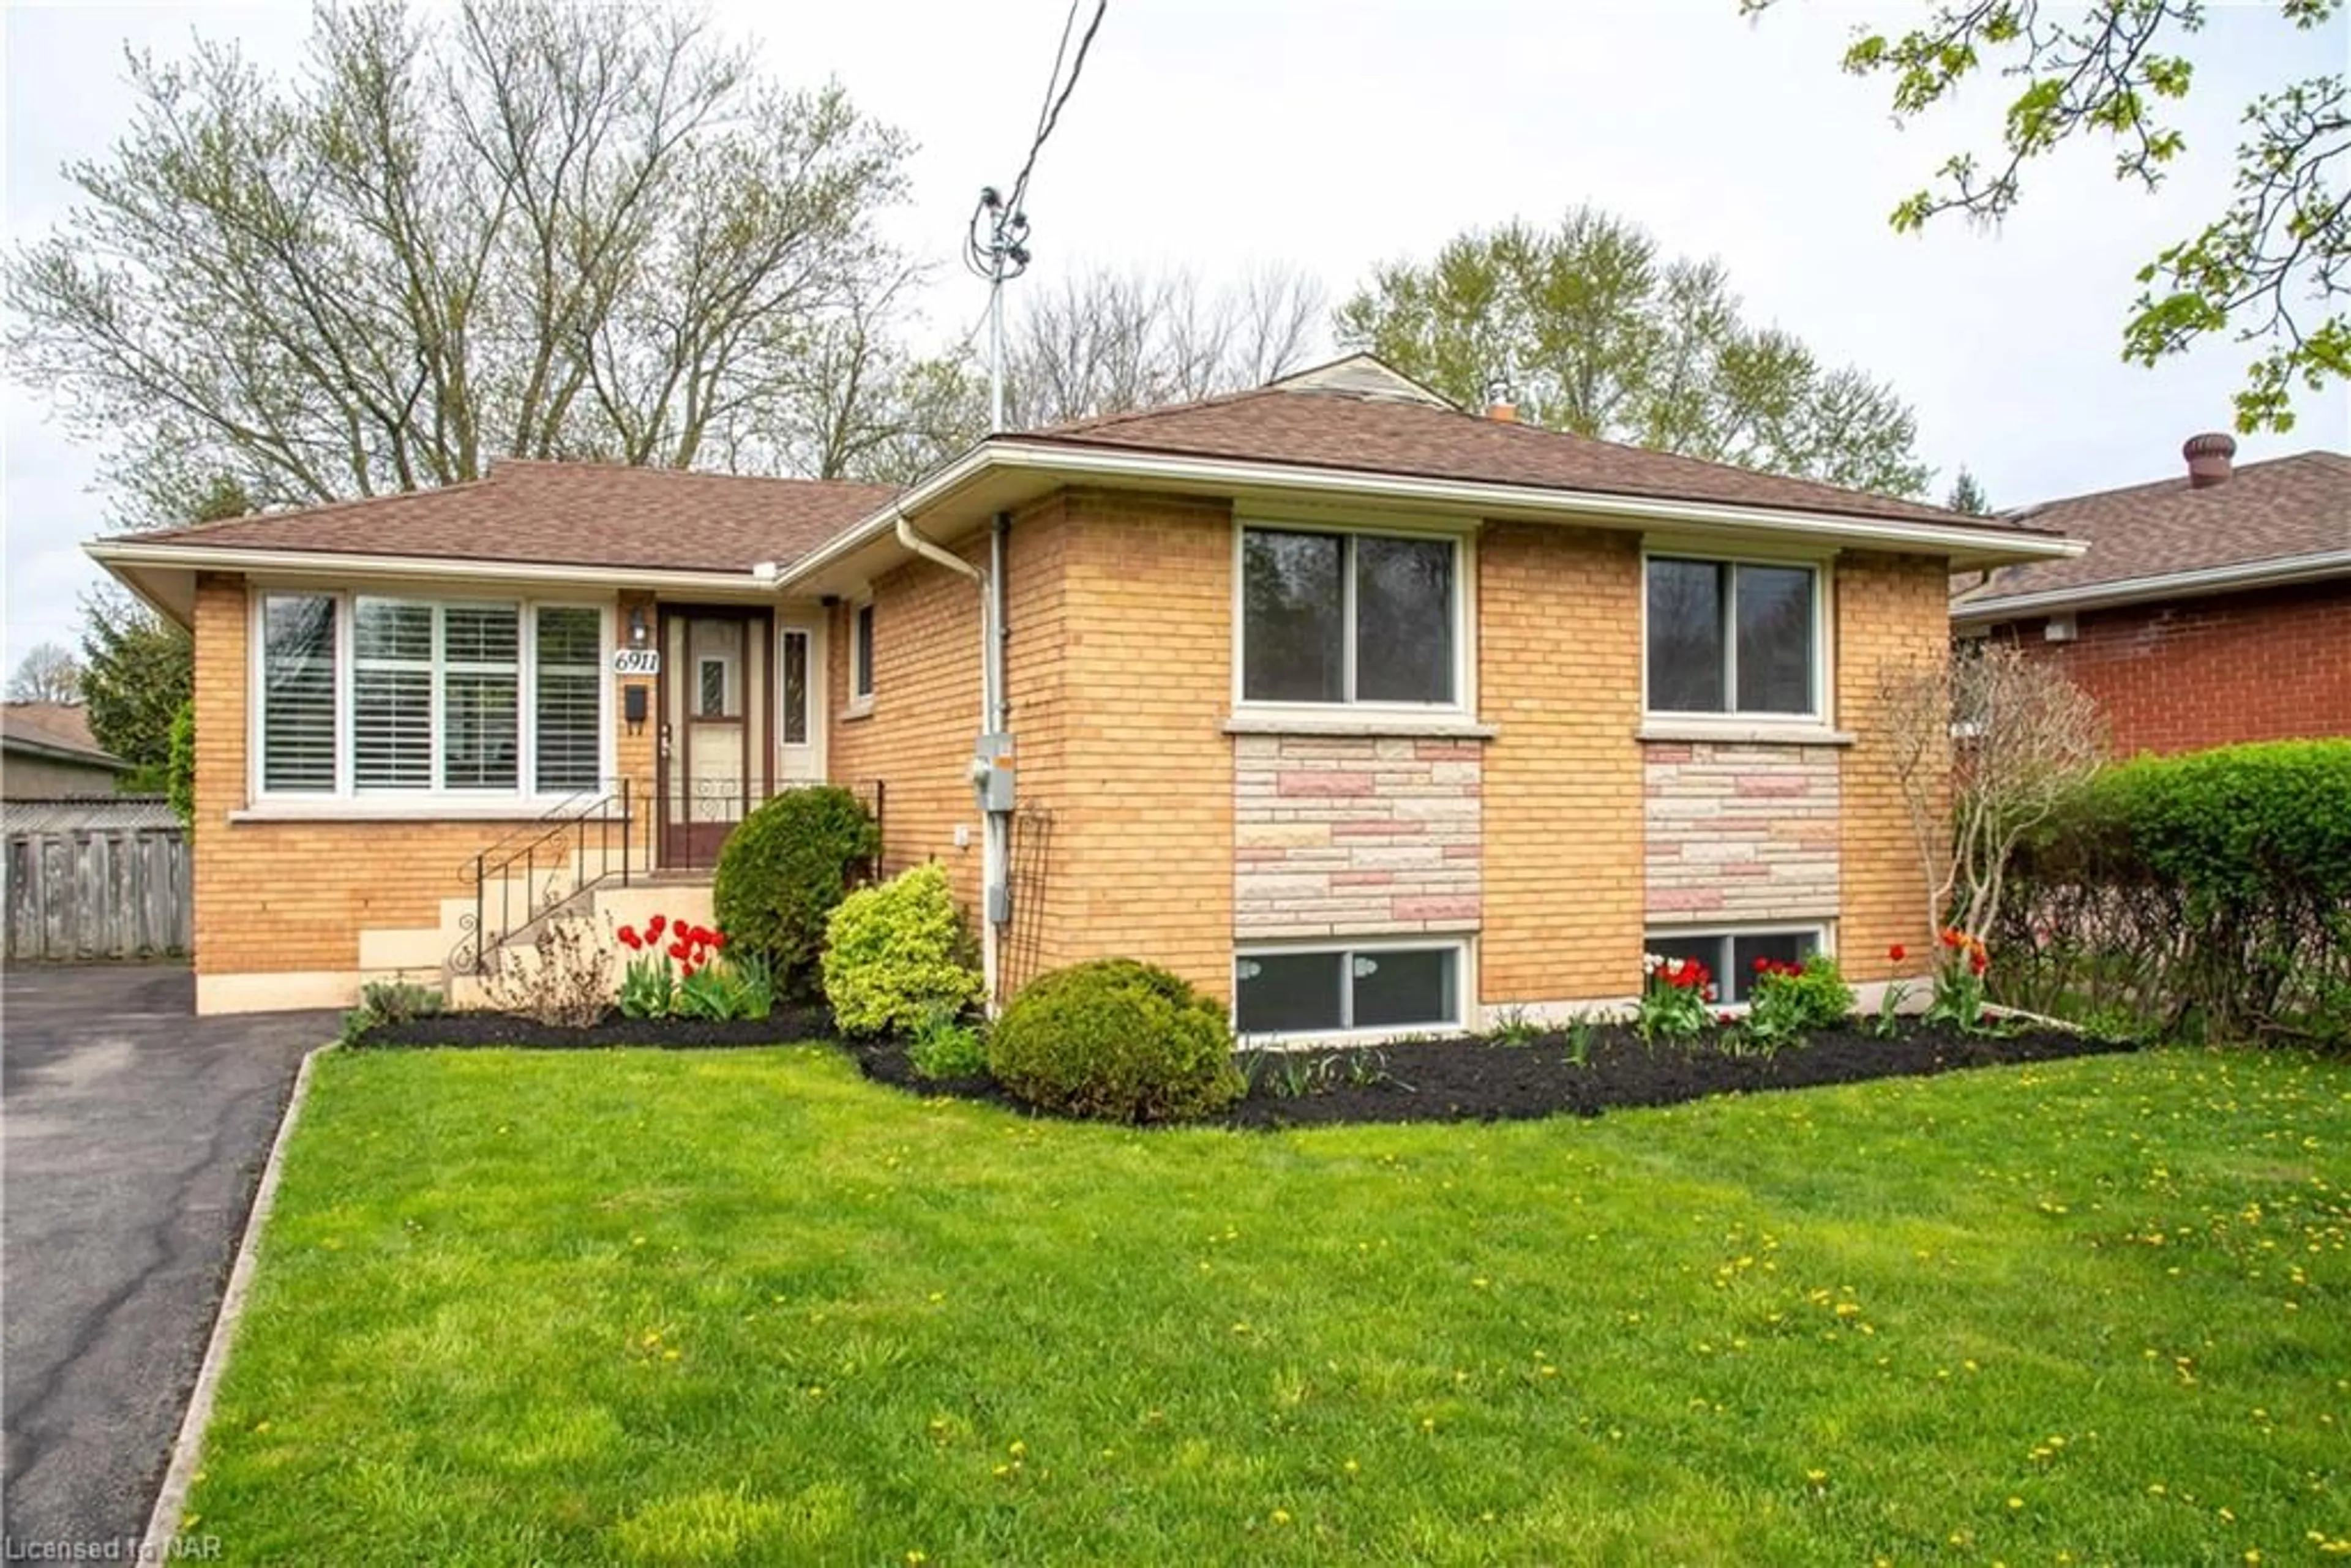 Home with brick exterior material for 6911 Hagar Ave, Niagara Falls Ontario L2G 5M6